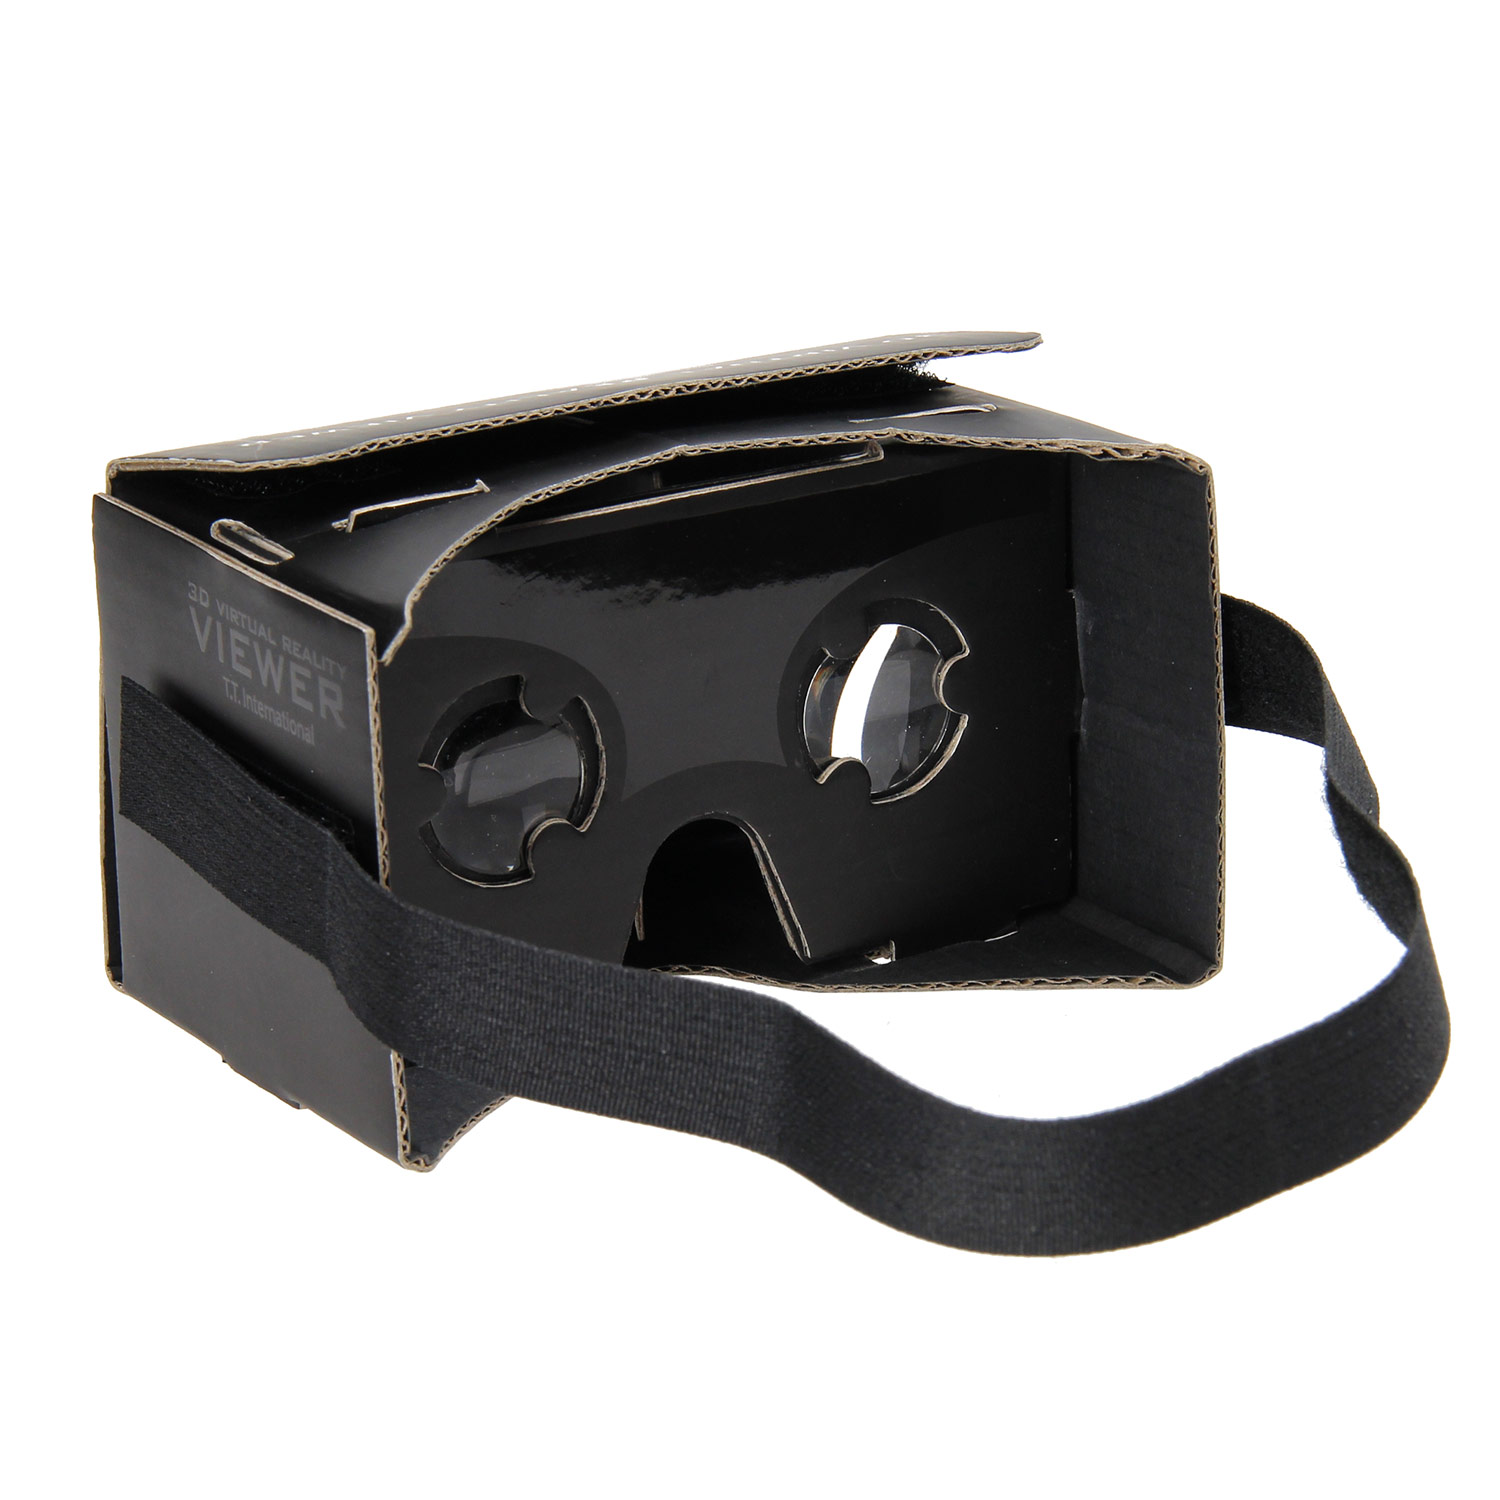 3D Virtual Viewer Karton